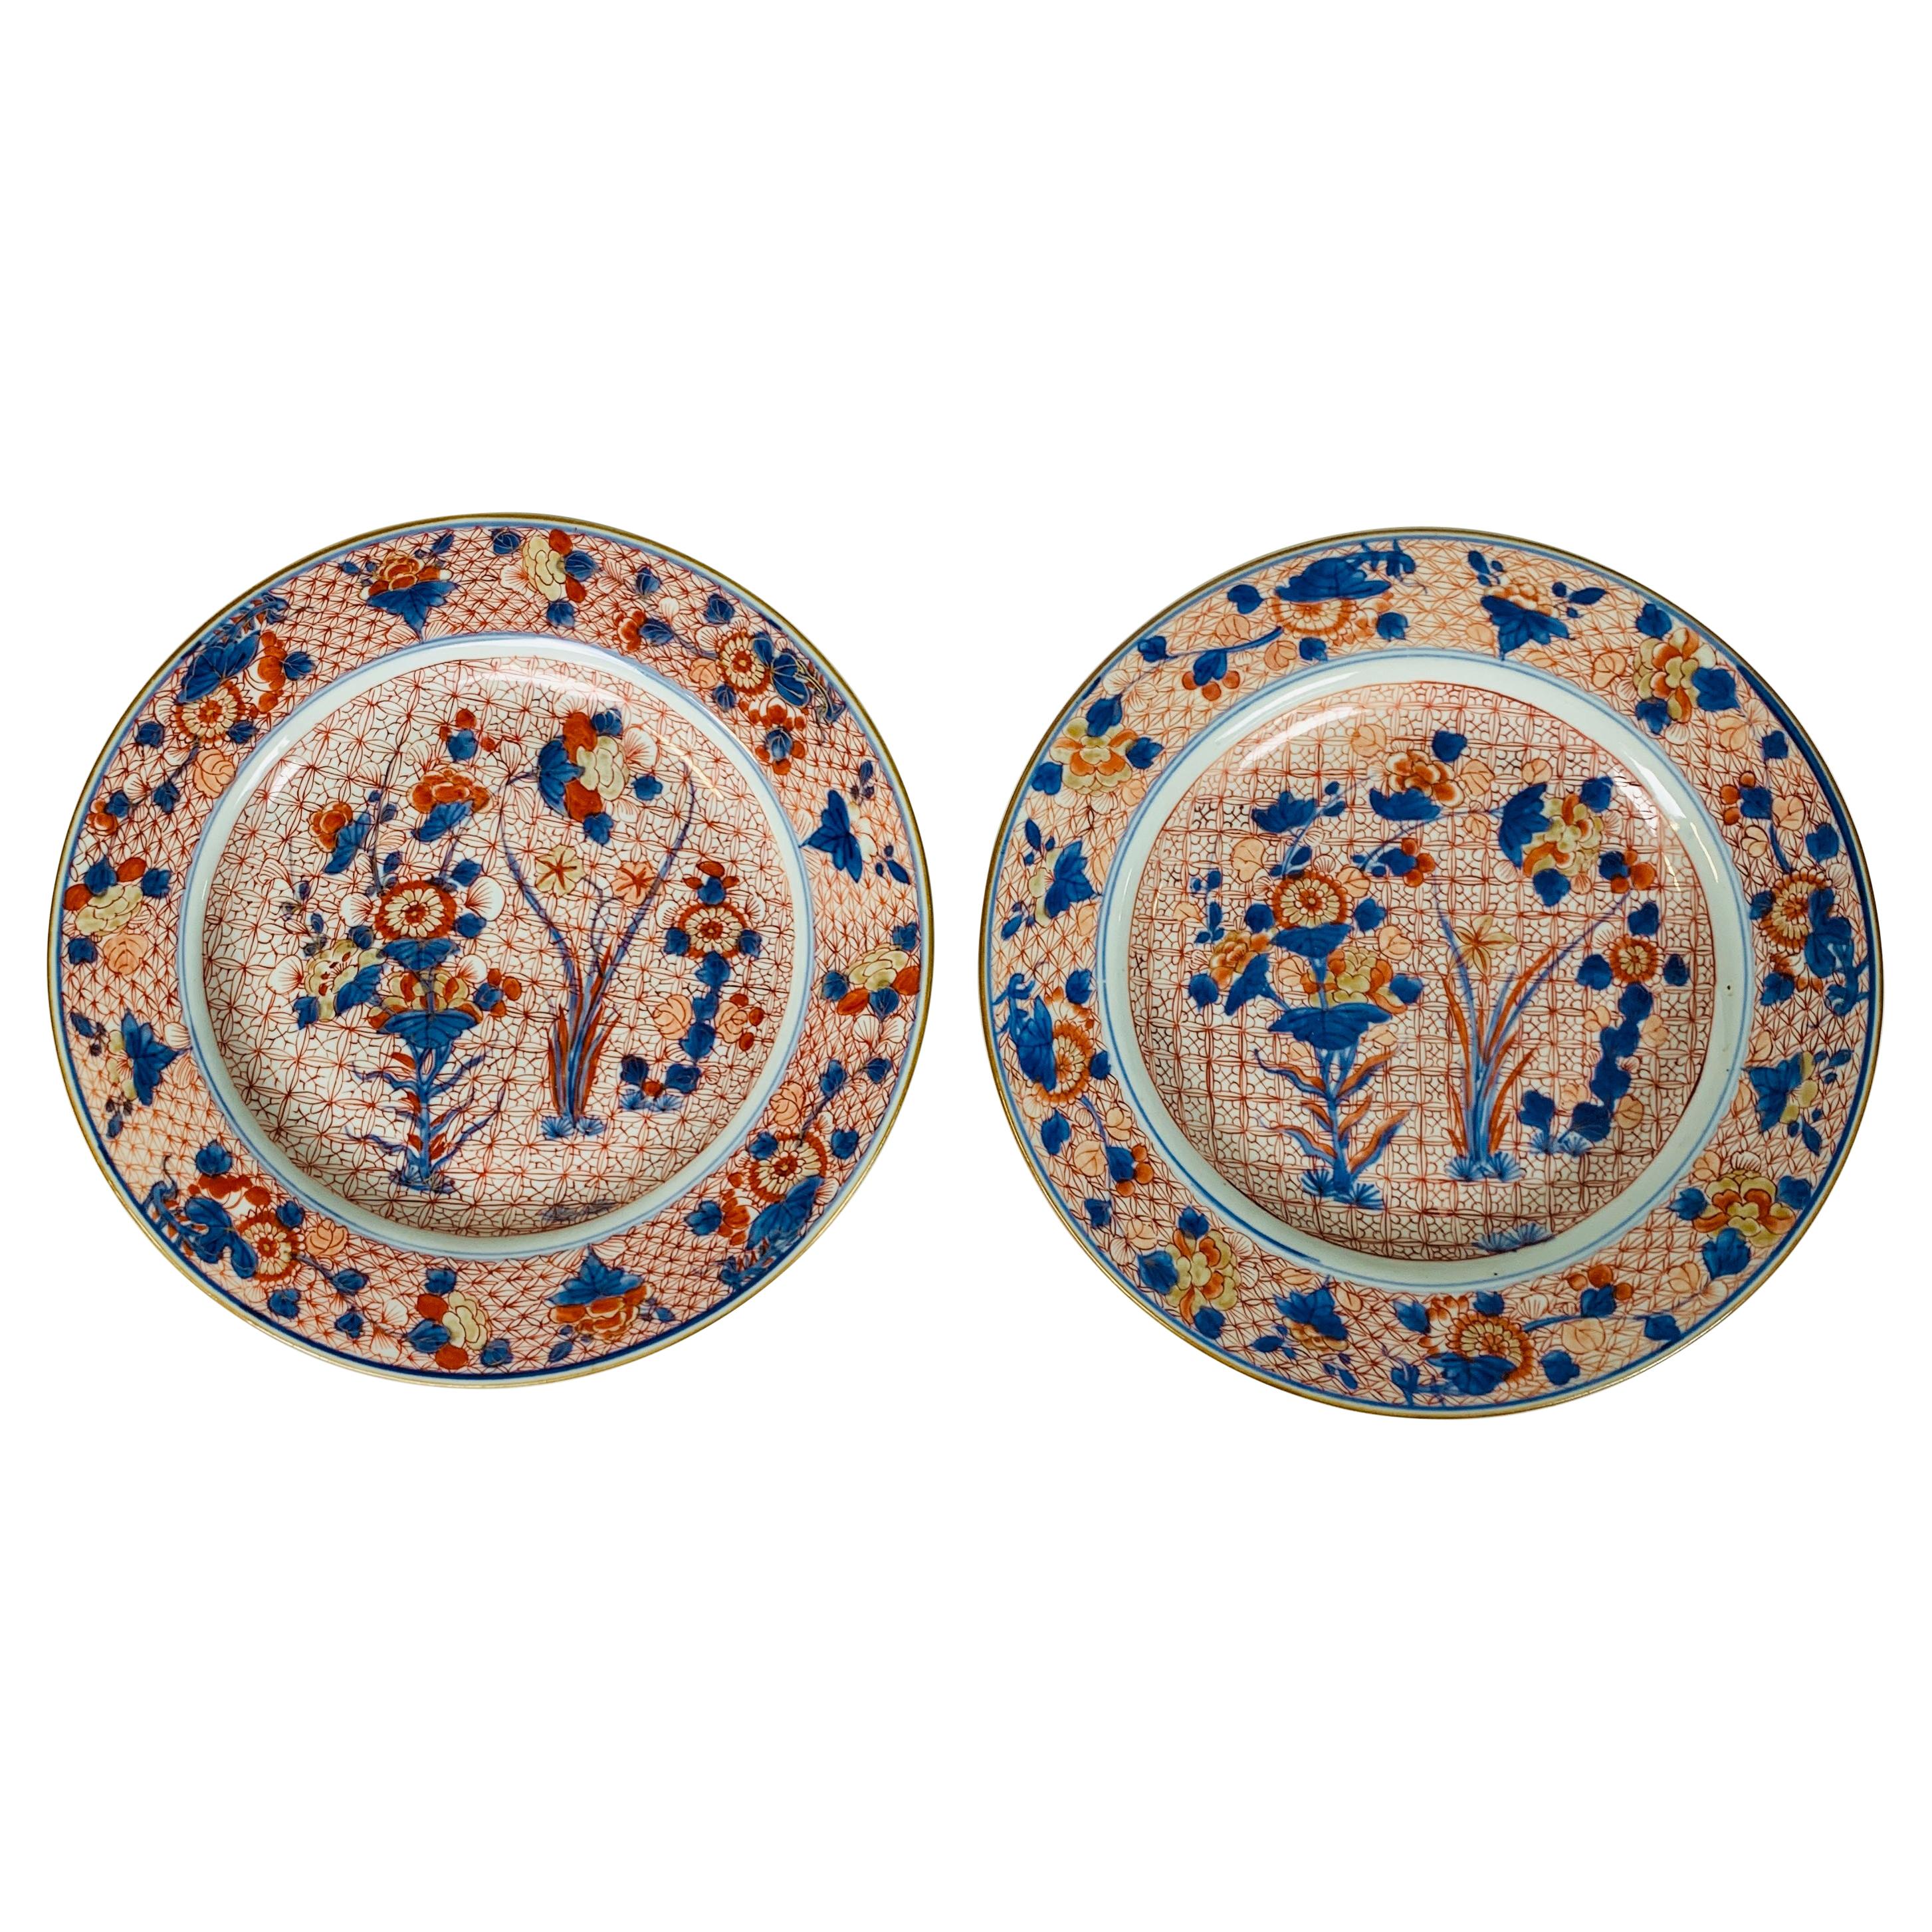 Pair Large Chinese Imari Porcelain Dishes Hand-Painted, Circa 1760